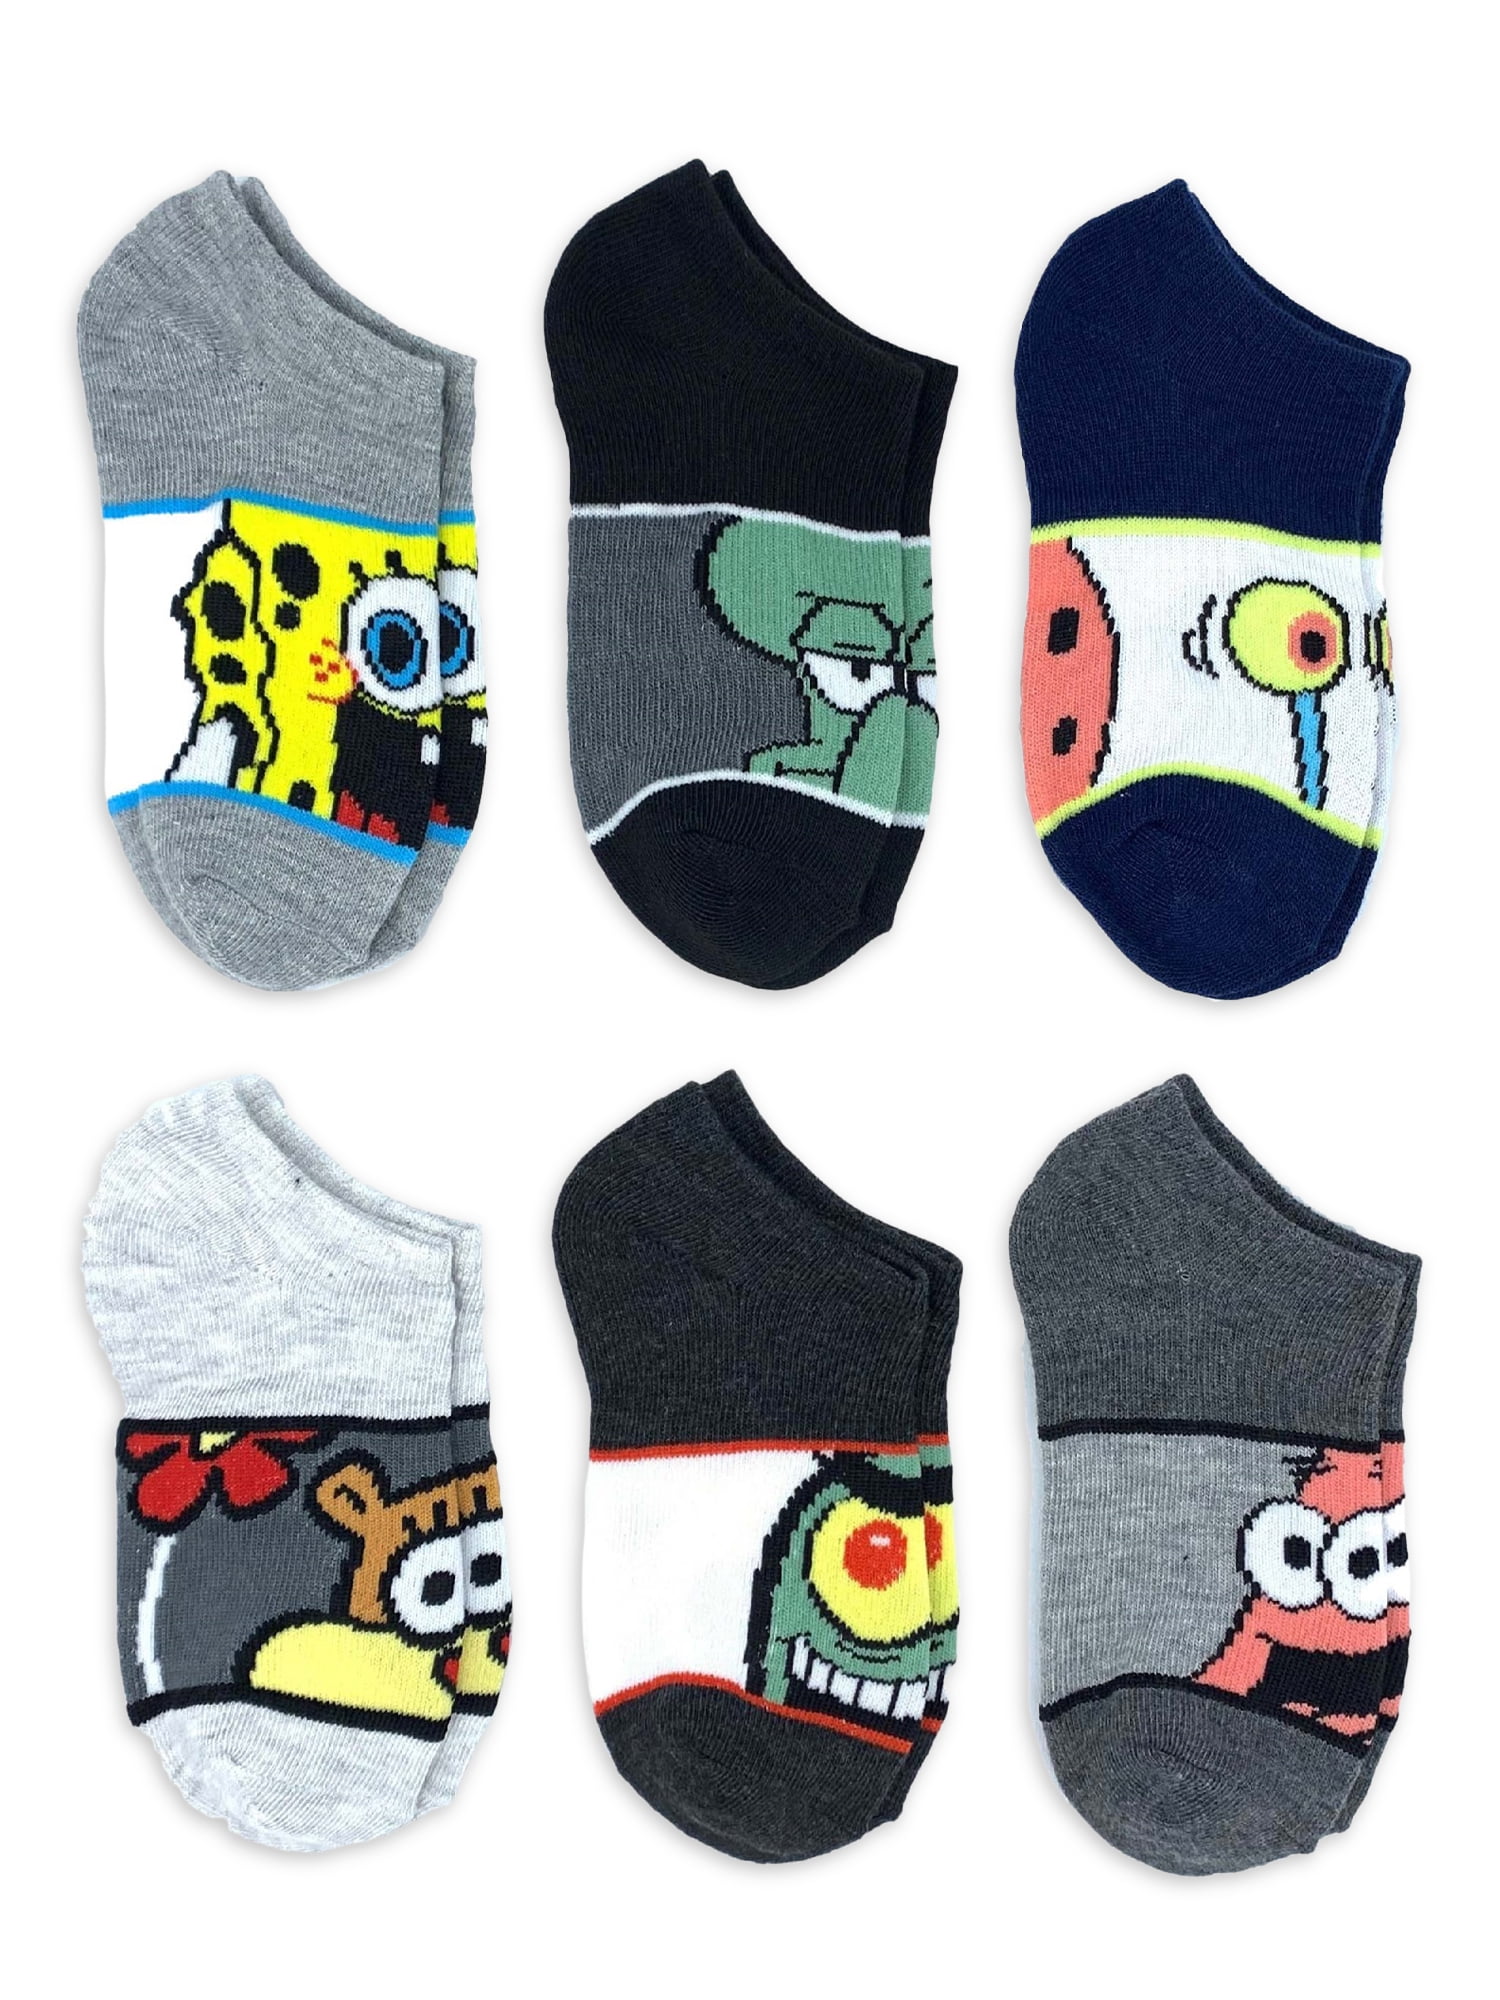 Spongebob Faces Boy Short – Socks and Bottoms